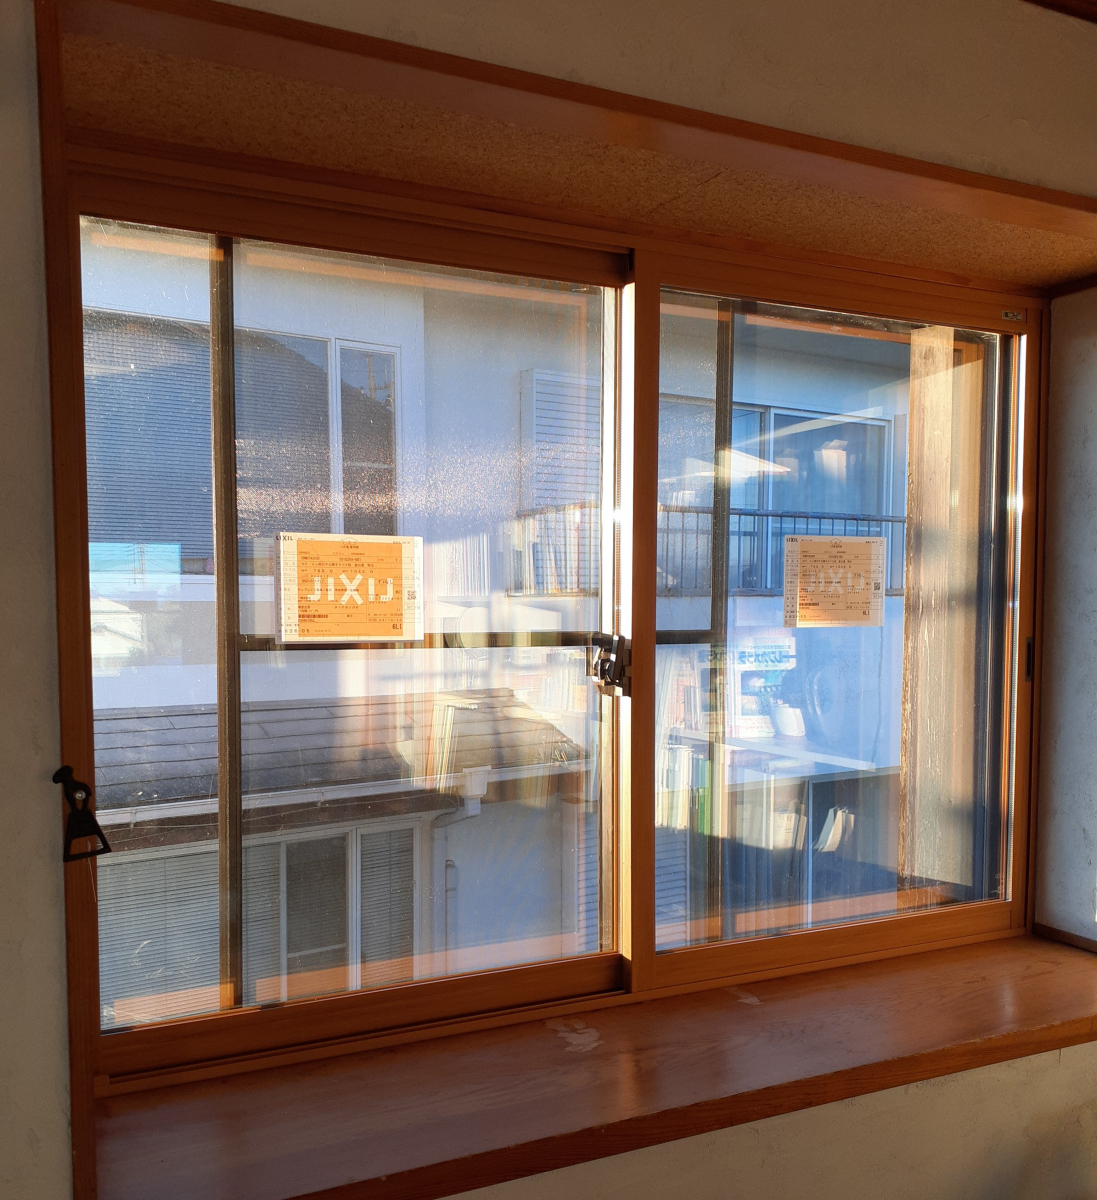 Reプレイス高崎の内窓工事補助金活用で快適に😊の施工後の写真1